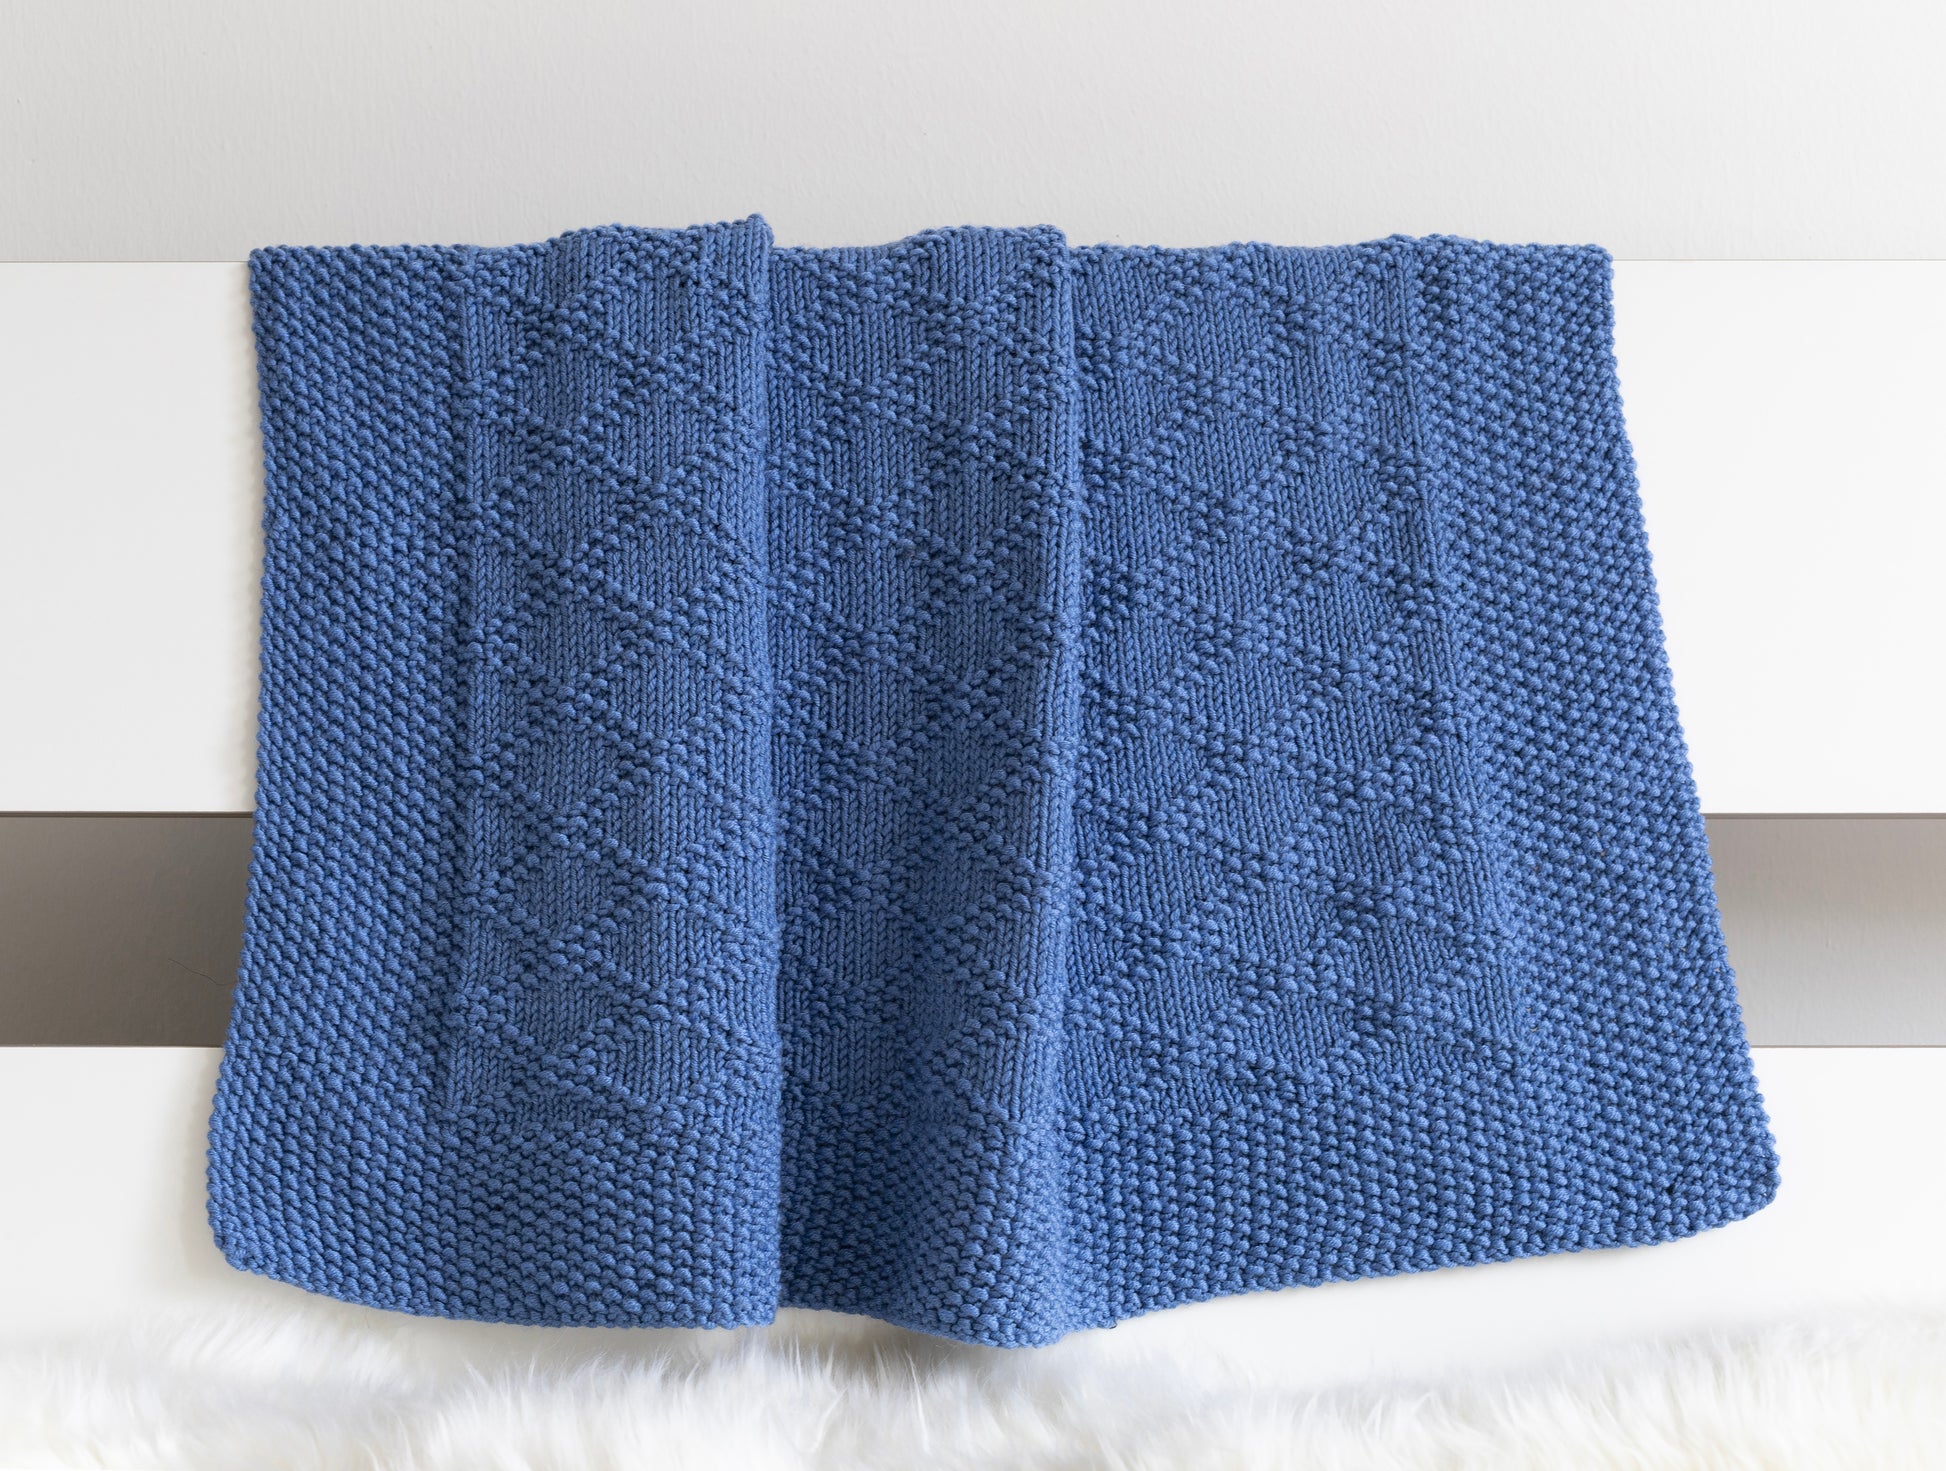 Blue merino wool hand-knitted blanket in Charles Brocade pattern